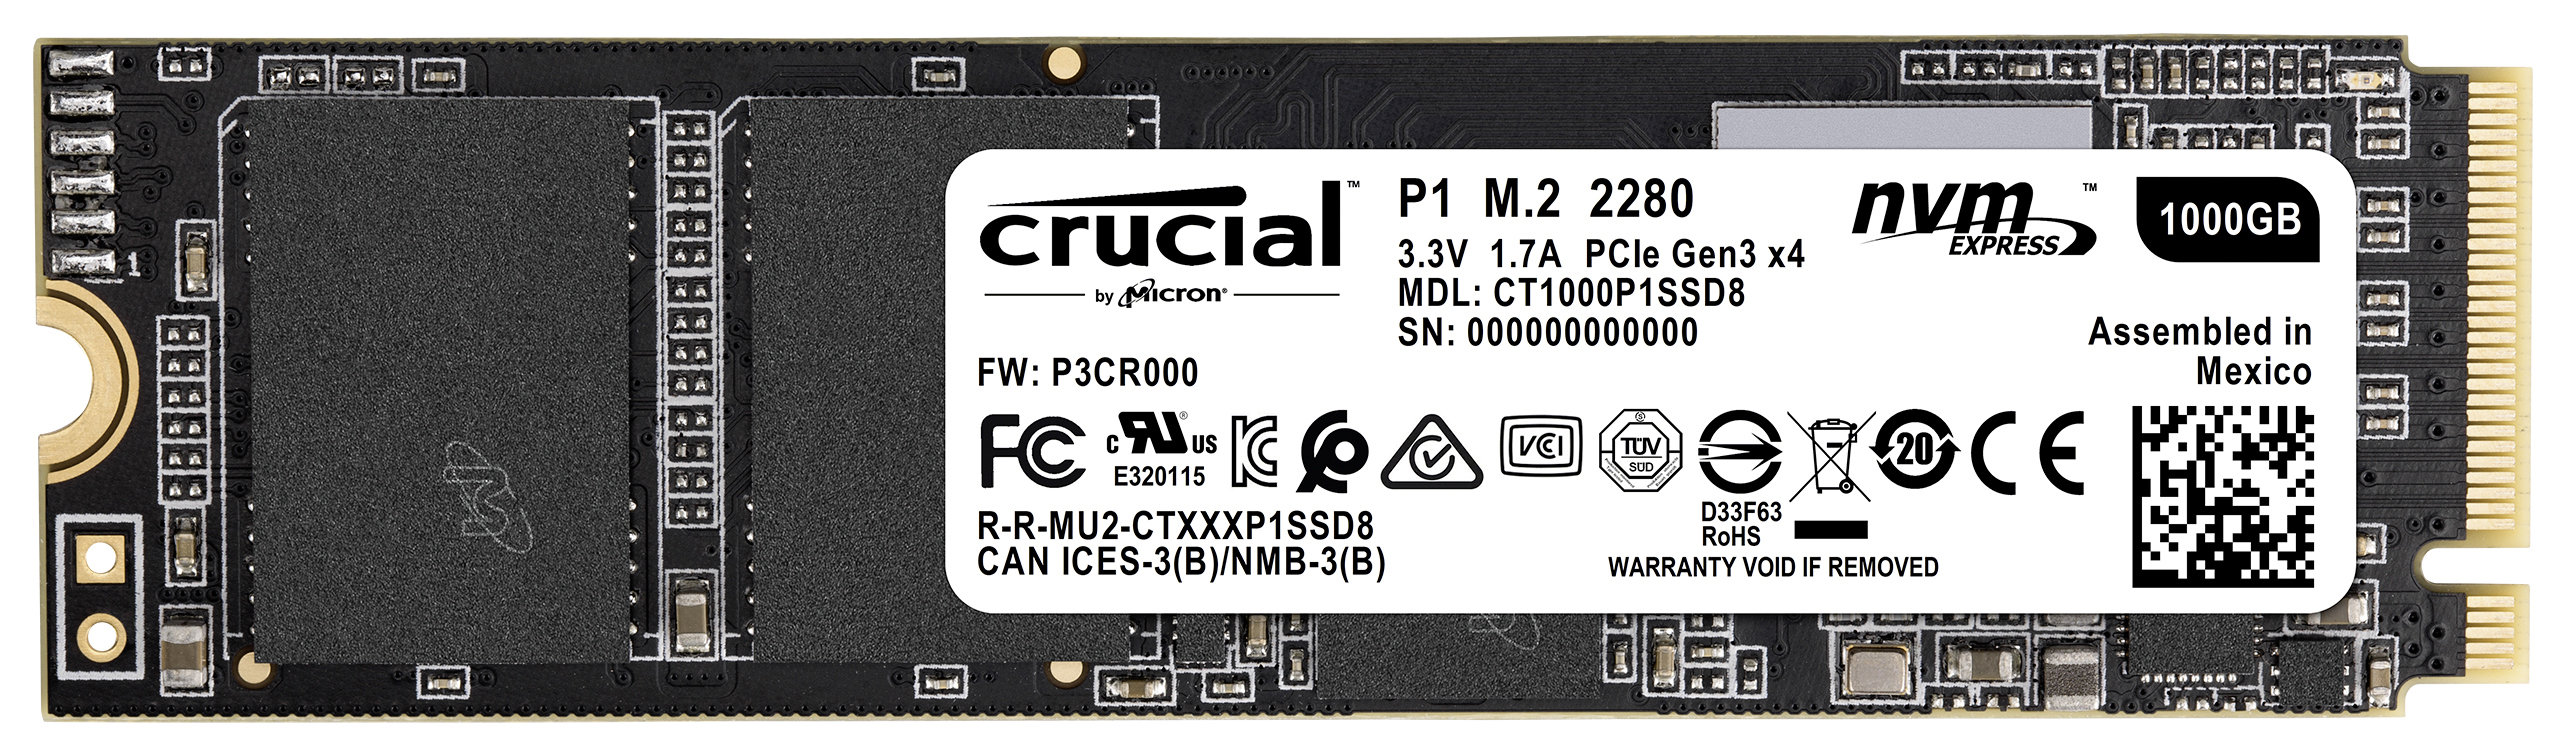 intern M.2 CT1000P1SSD8 SSD PCIe, 1 CRUCIAL TB via Festplatte,